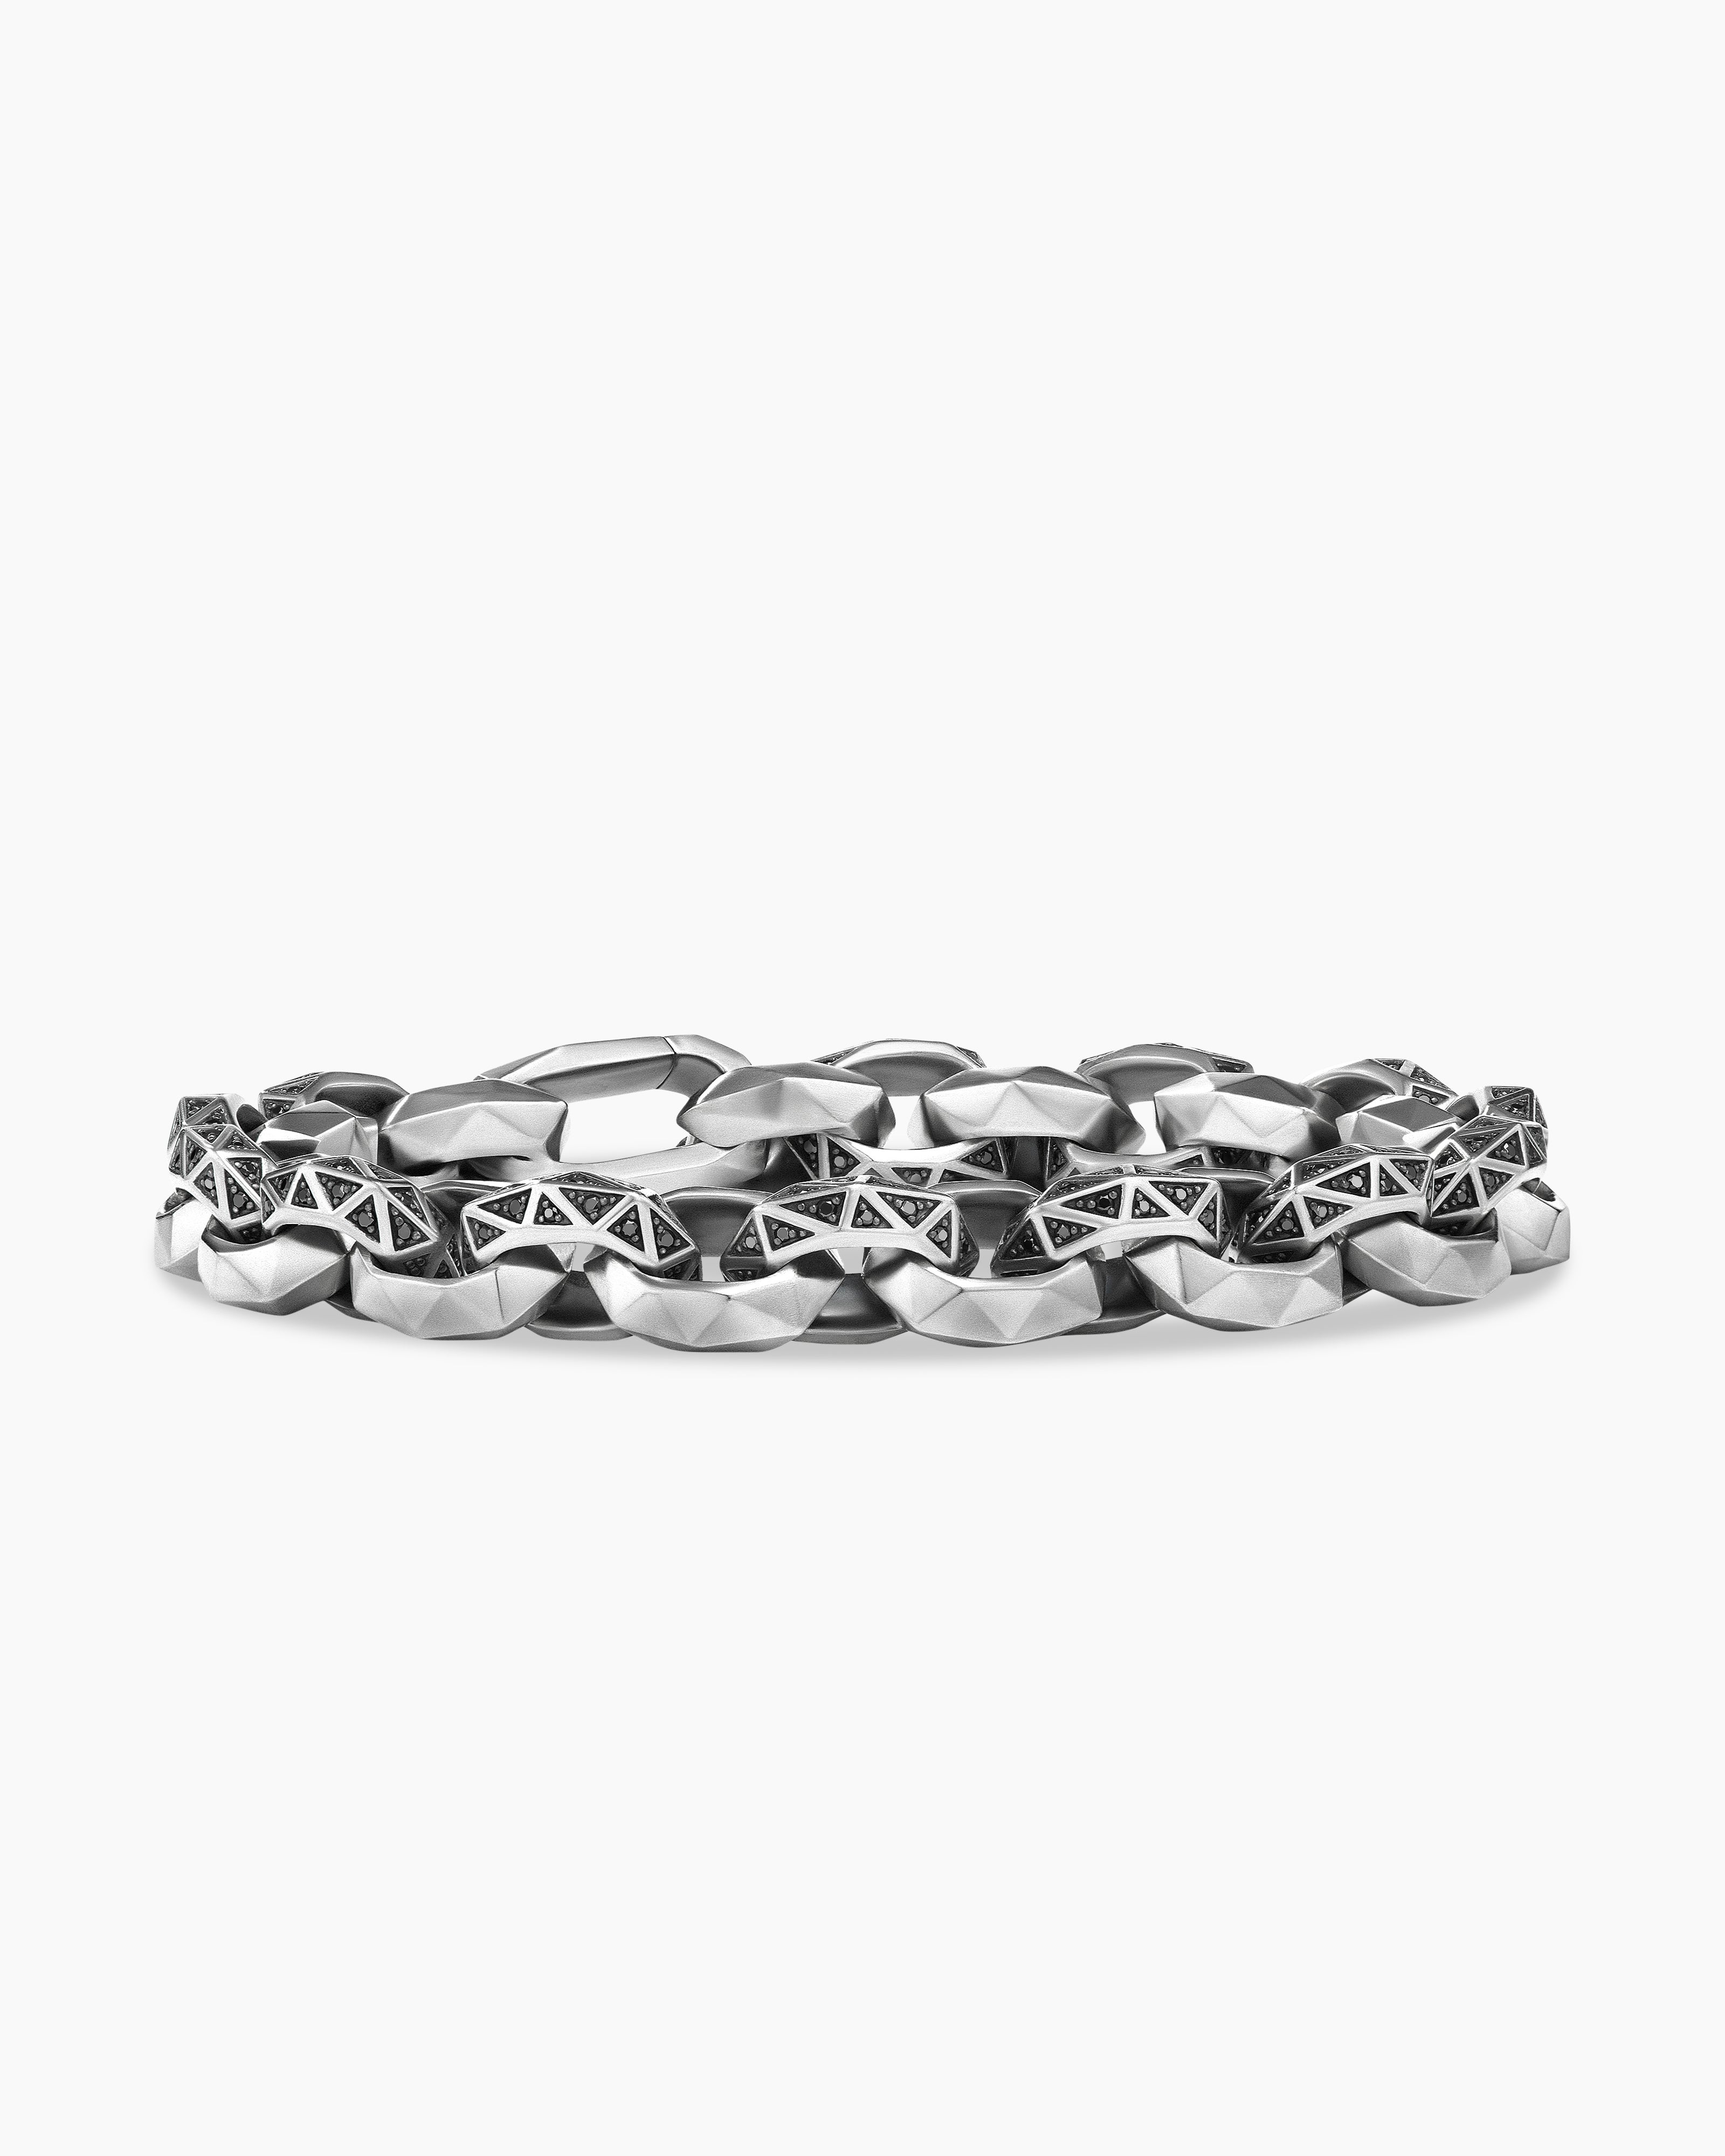 David Yurman Torqued Faceted Link Bracelet in Sterling Silver with Pave Black Diamonds | Medium